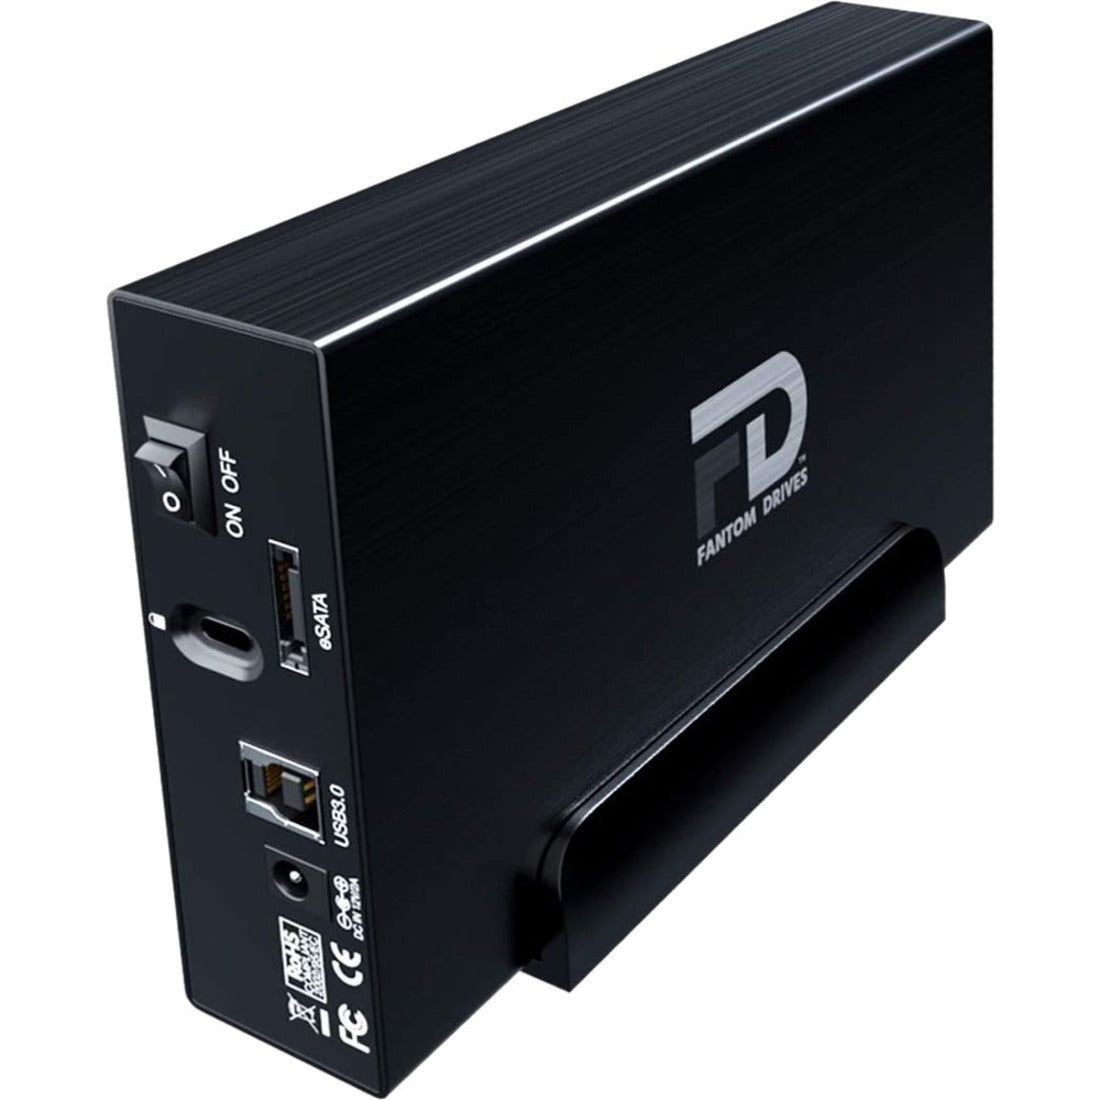 Fantom Drives 6TB External Hard Drive - GFORCE 3 - USB 3 eSATA Aluminum Black GF3B6000EU